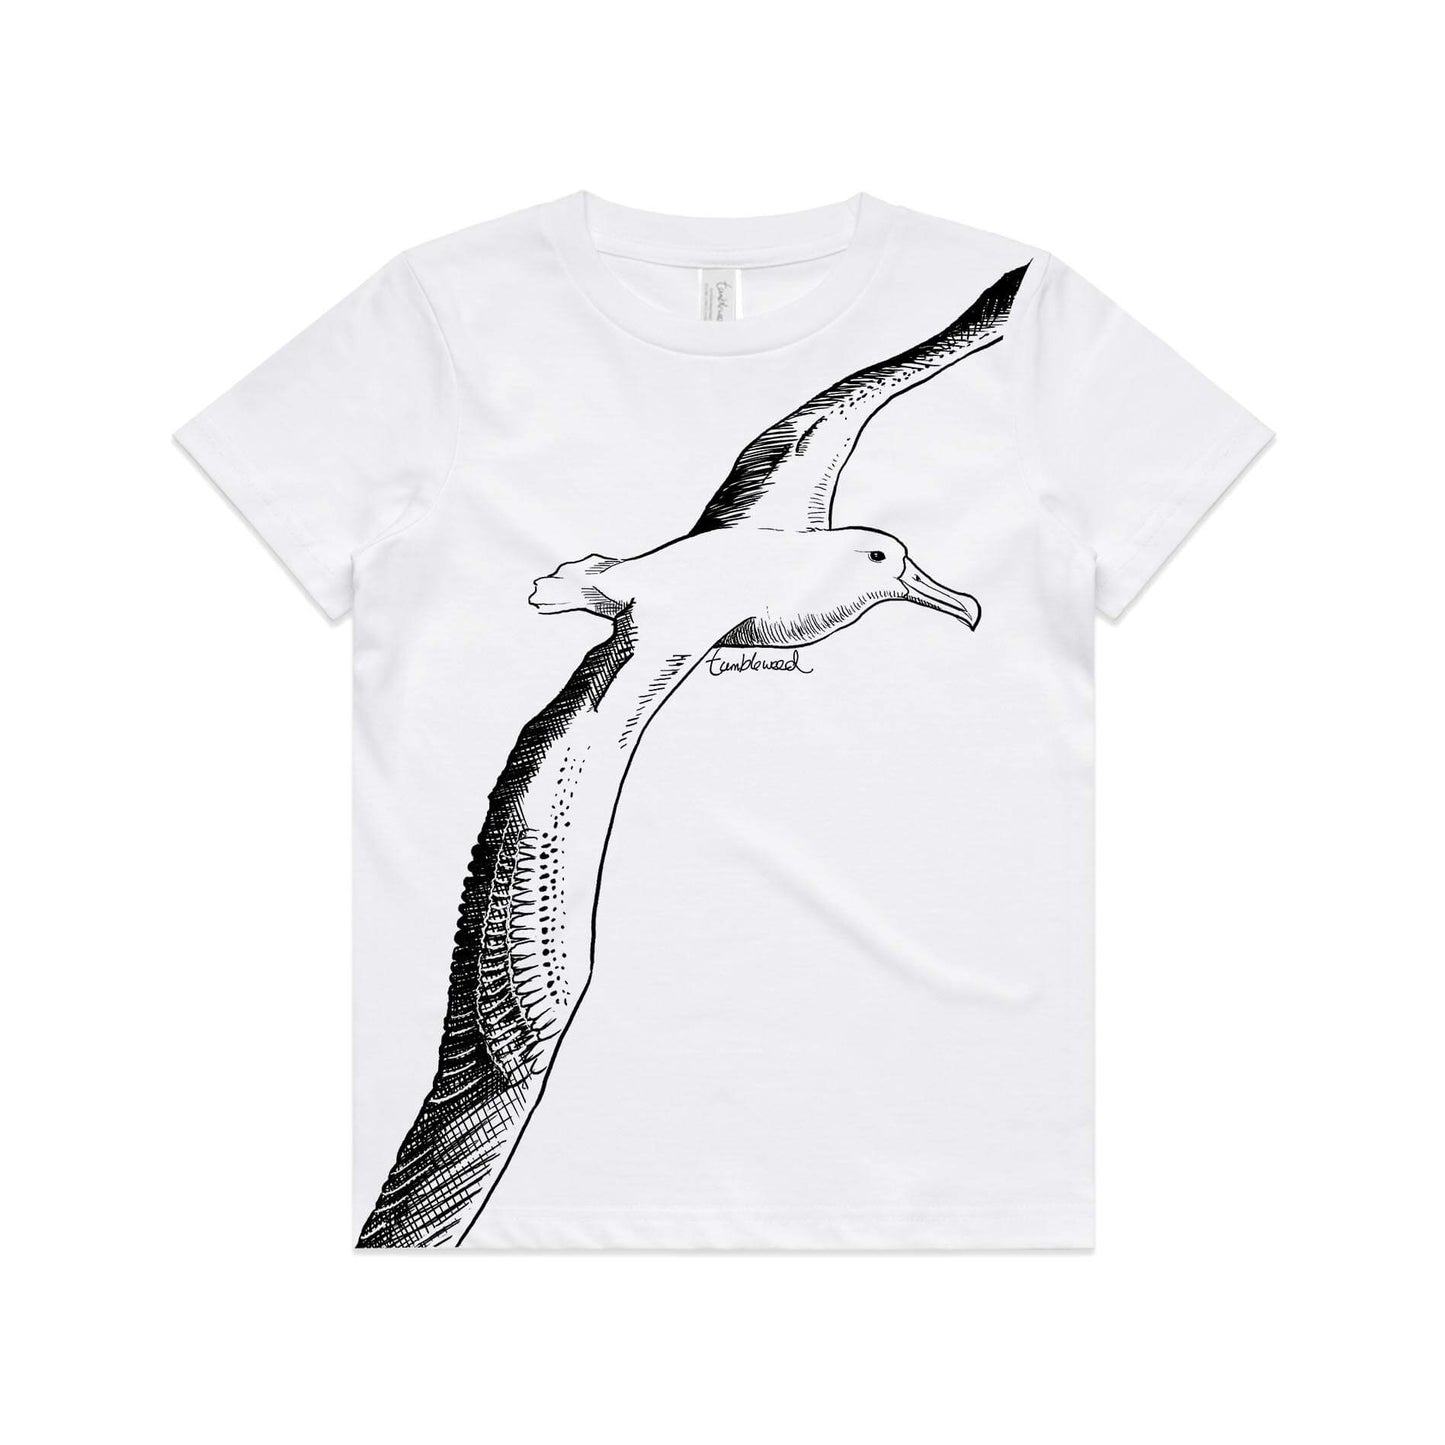 White, cotton kids' t-shirt with screen printed albatross design.